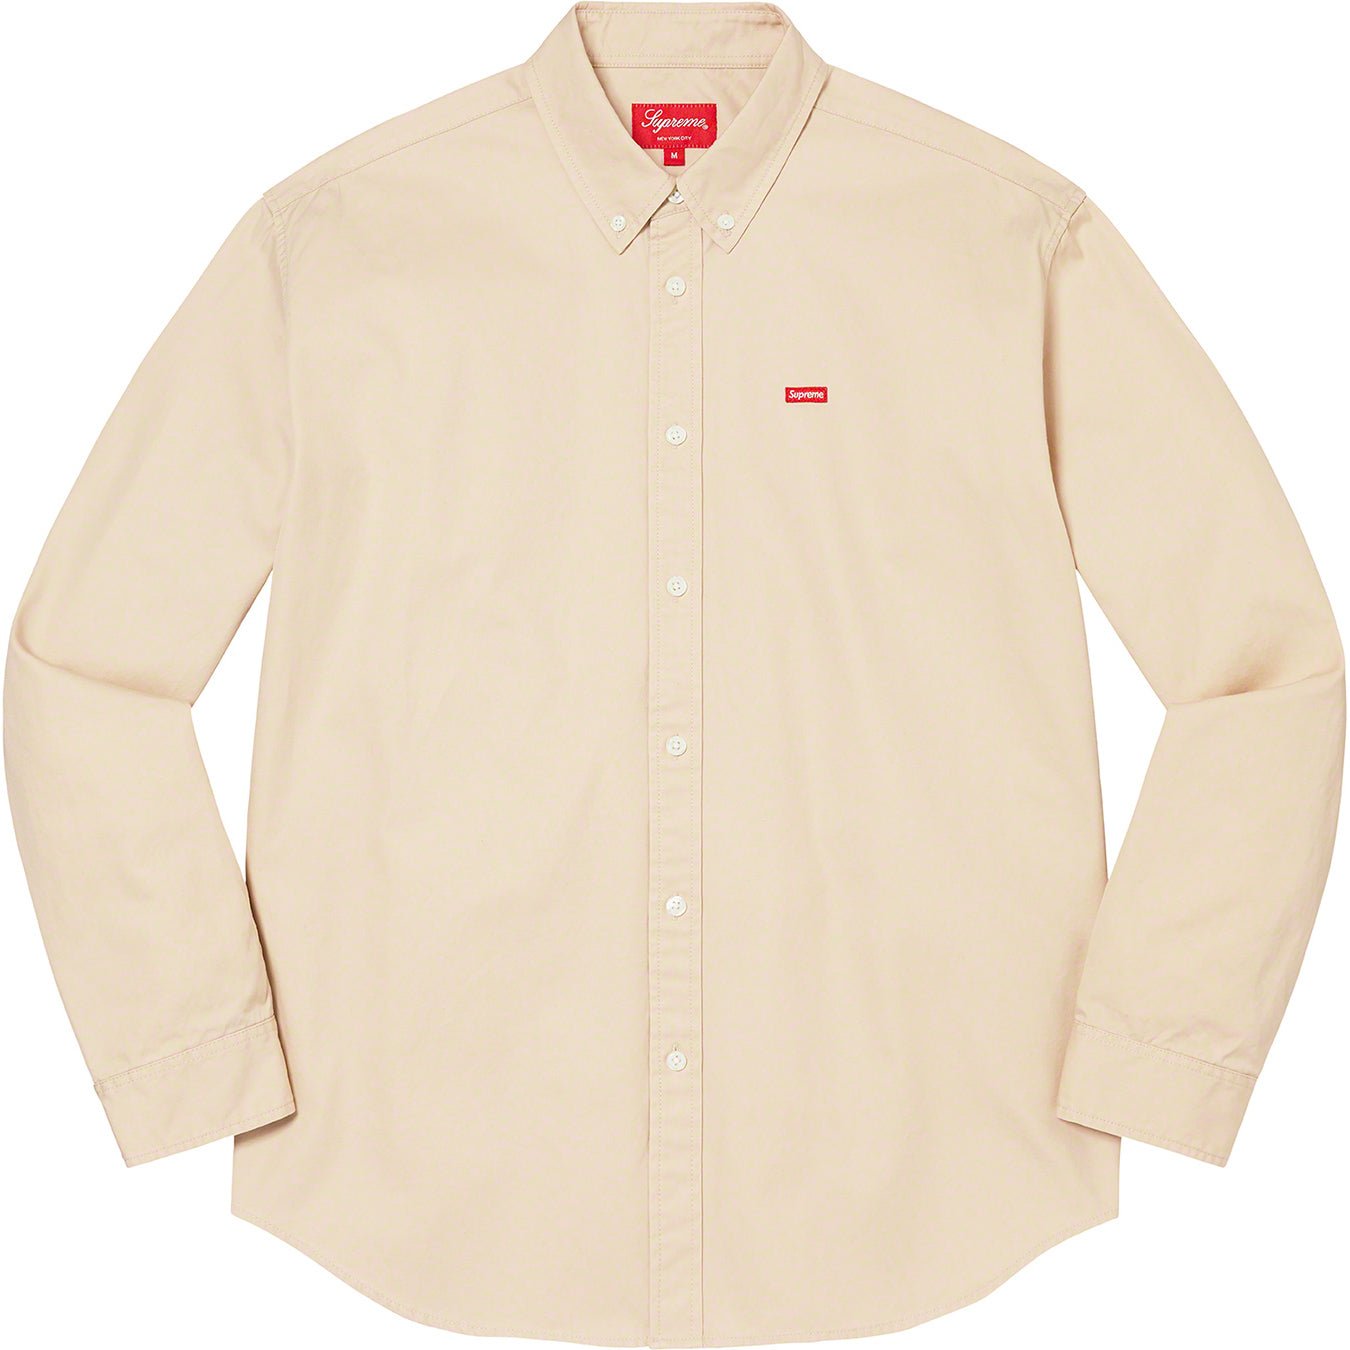 Supreme - Shirts, Button down shirts